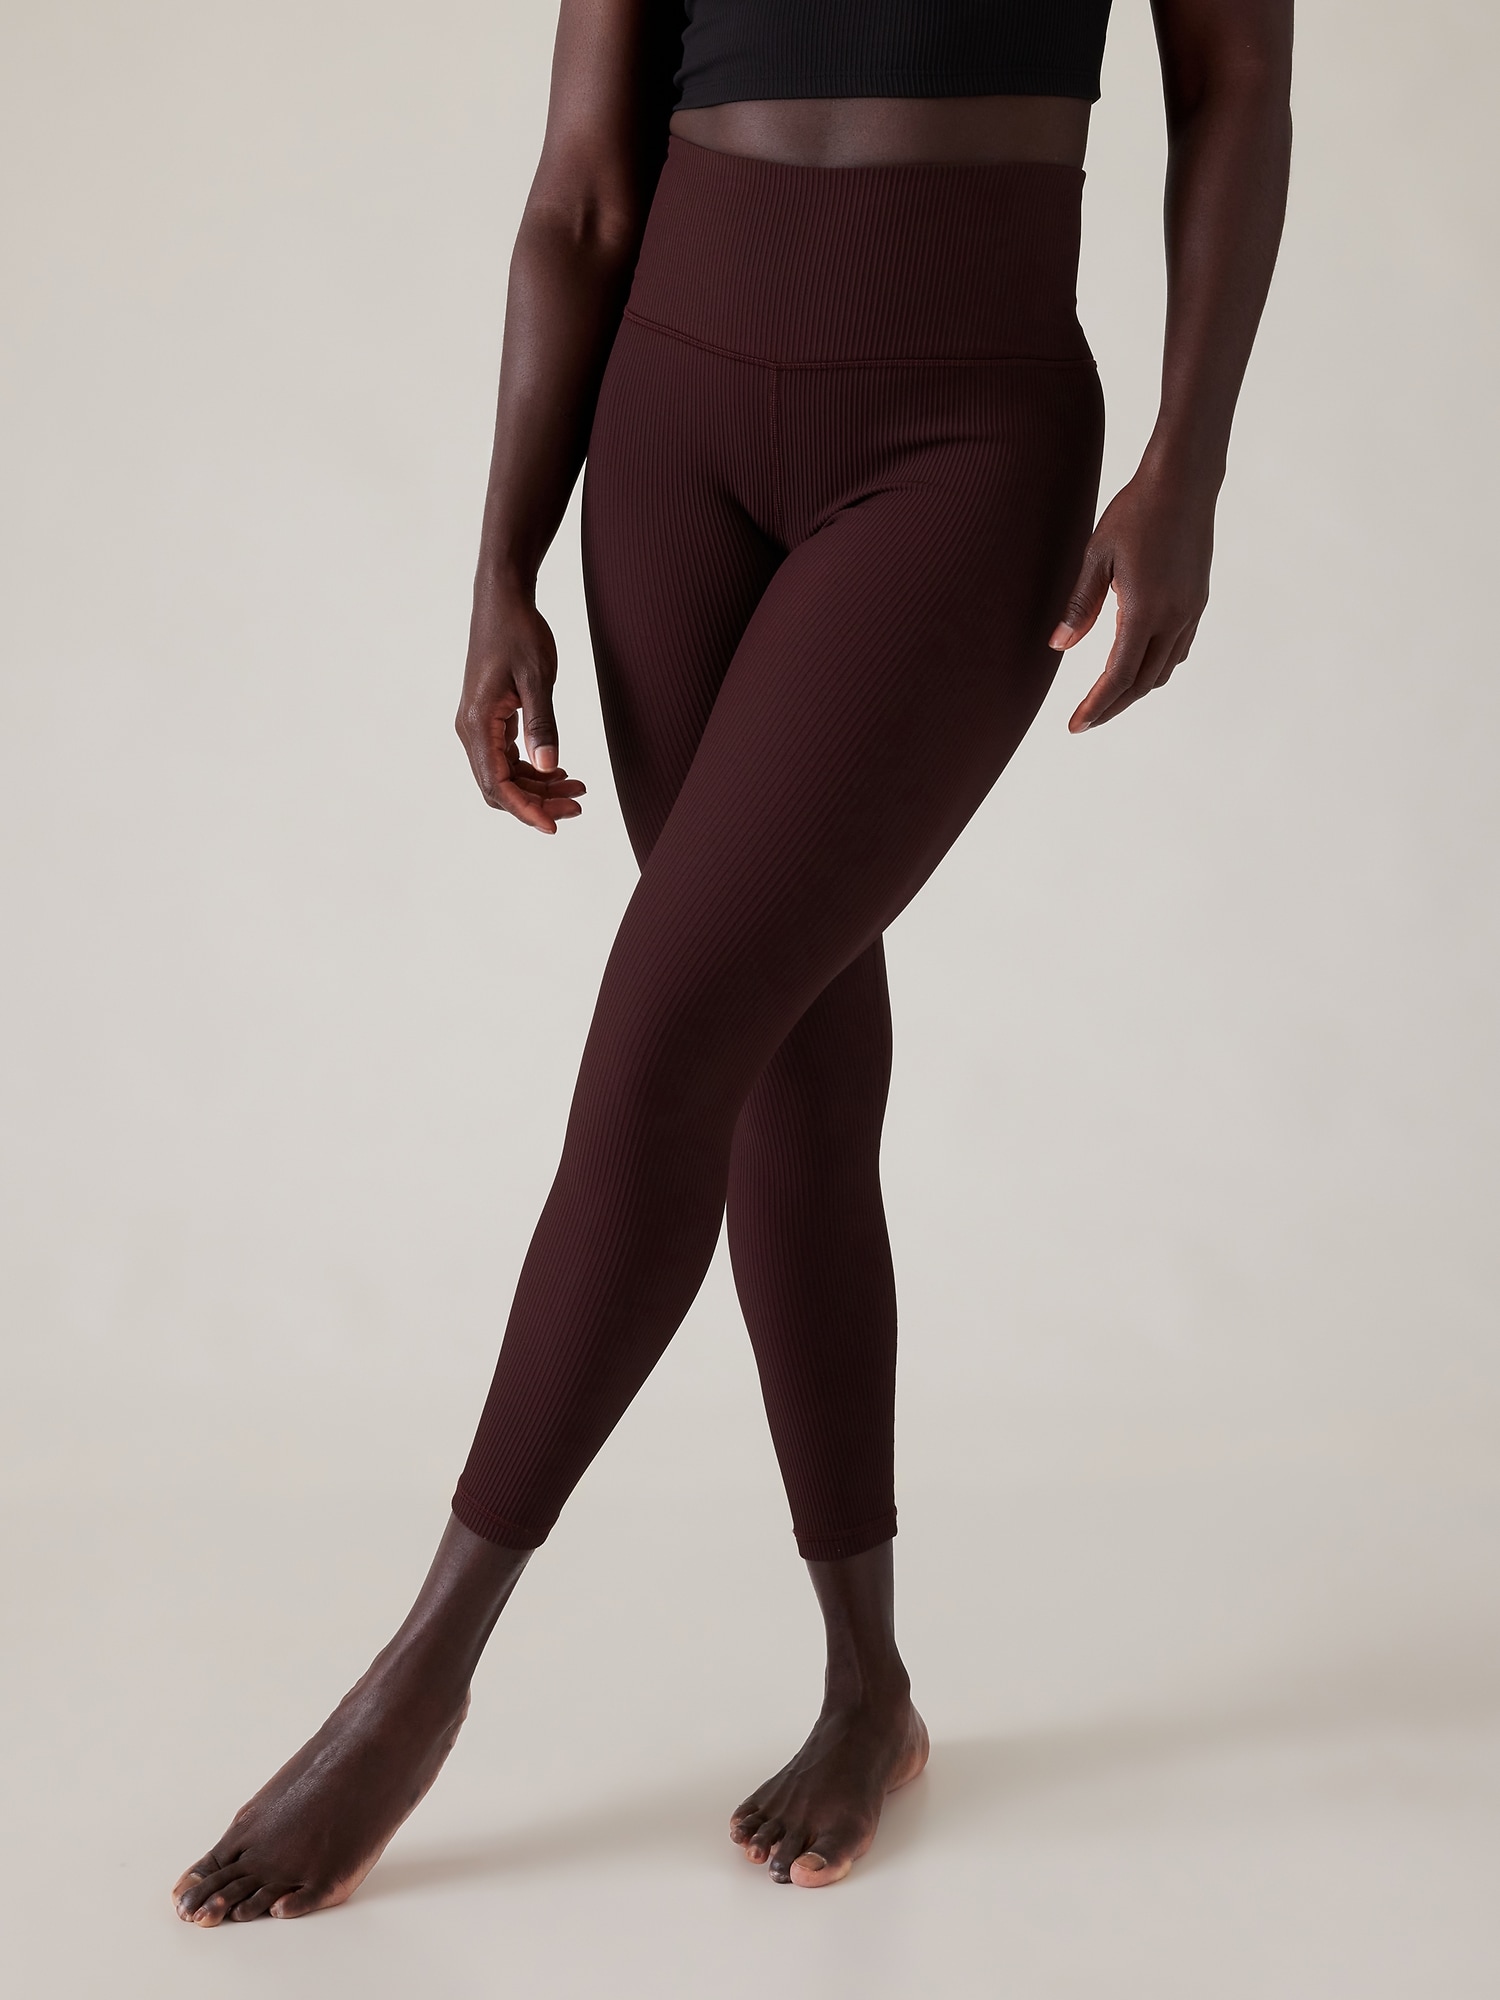 Burgundy Leggings for Women, Yoga Pants, 5 High Waist Leggings, Buttery Soft,  One Size and Plus Size Leggings, Solid Color Leggings -  Canada